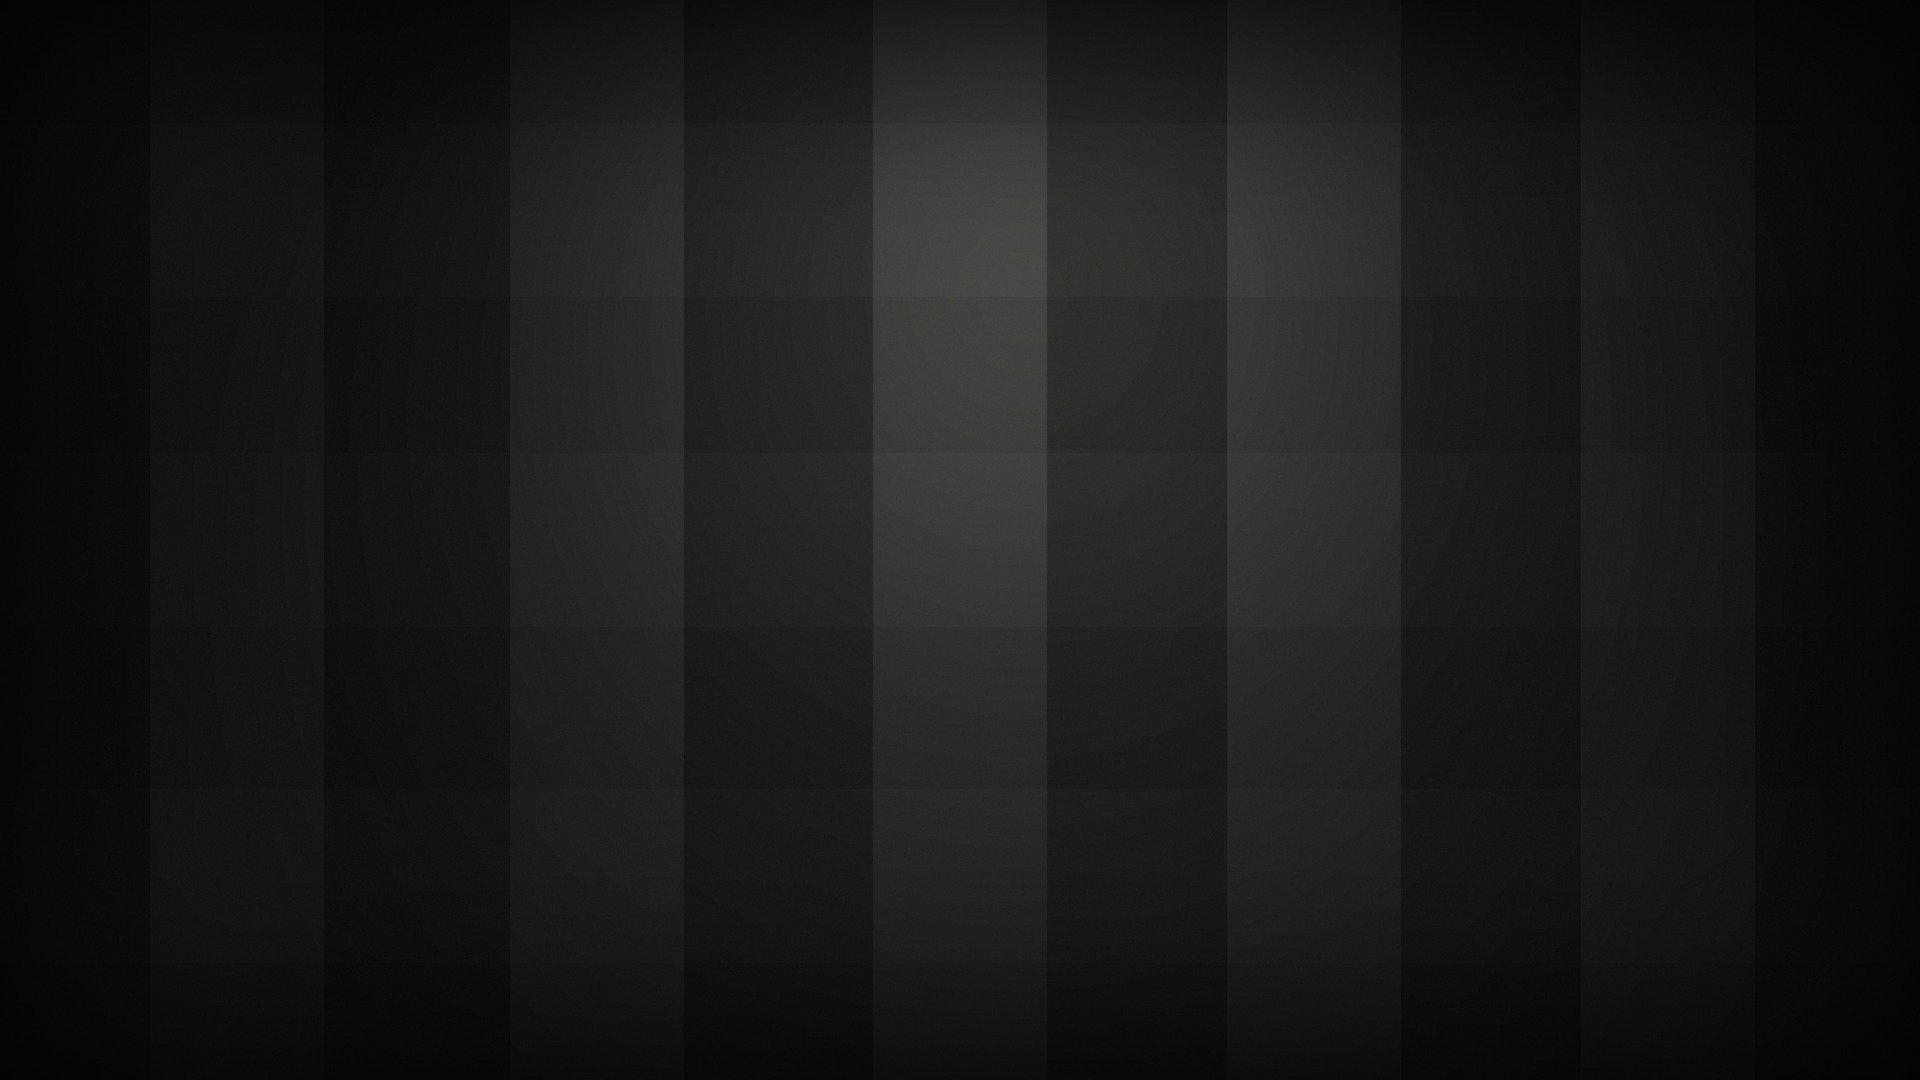 Background black - background đen ngầu, chất nhất 2021